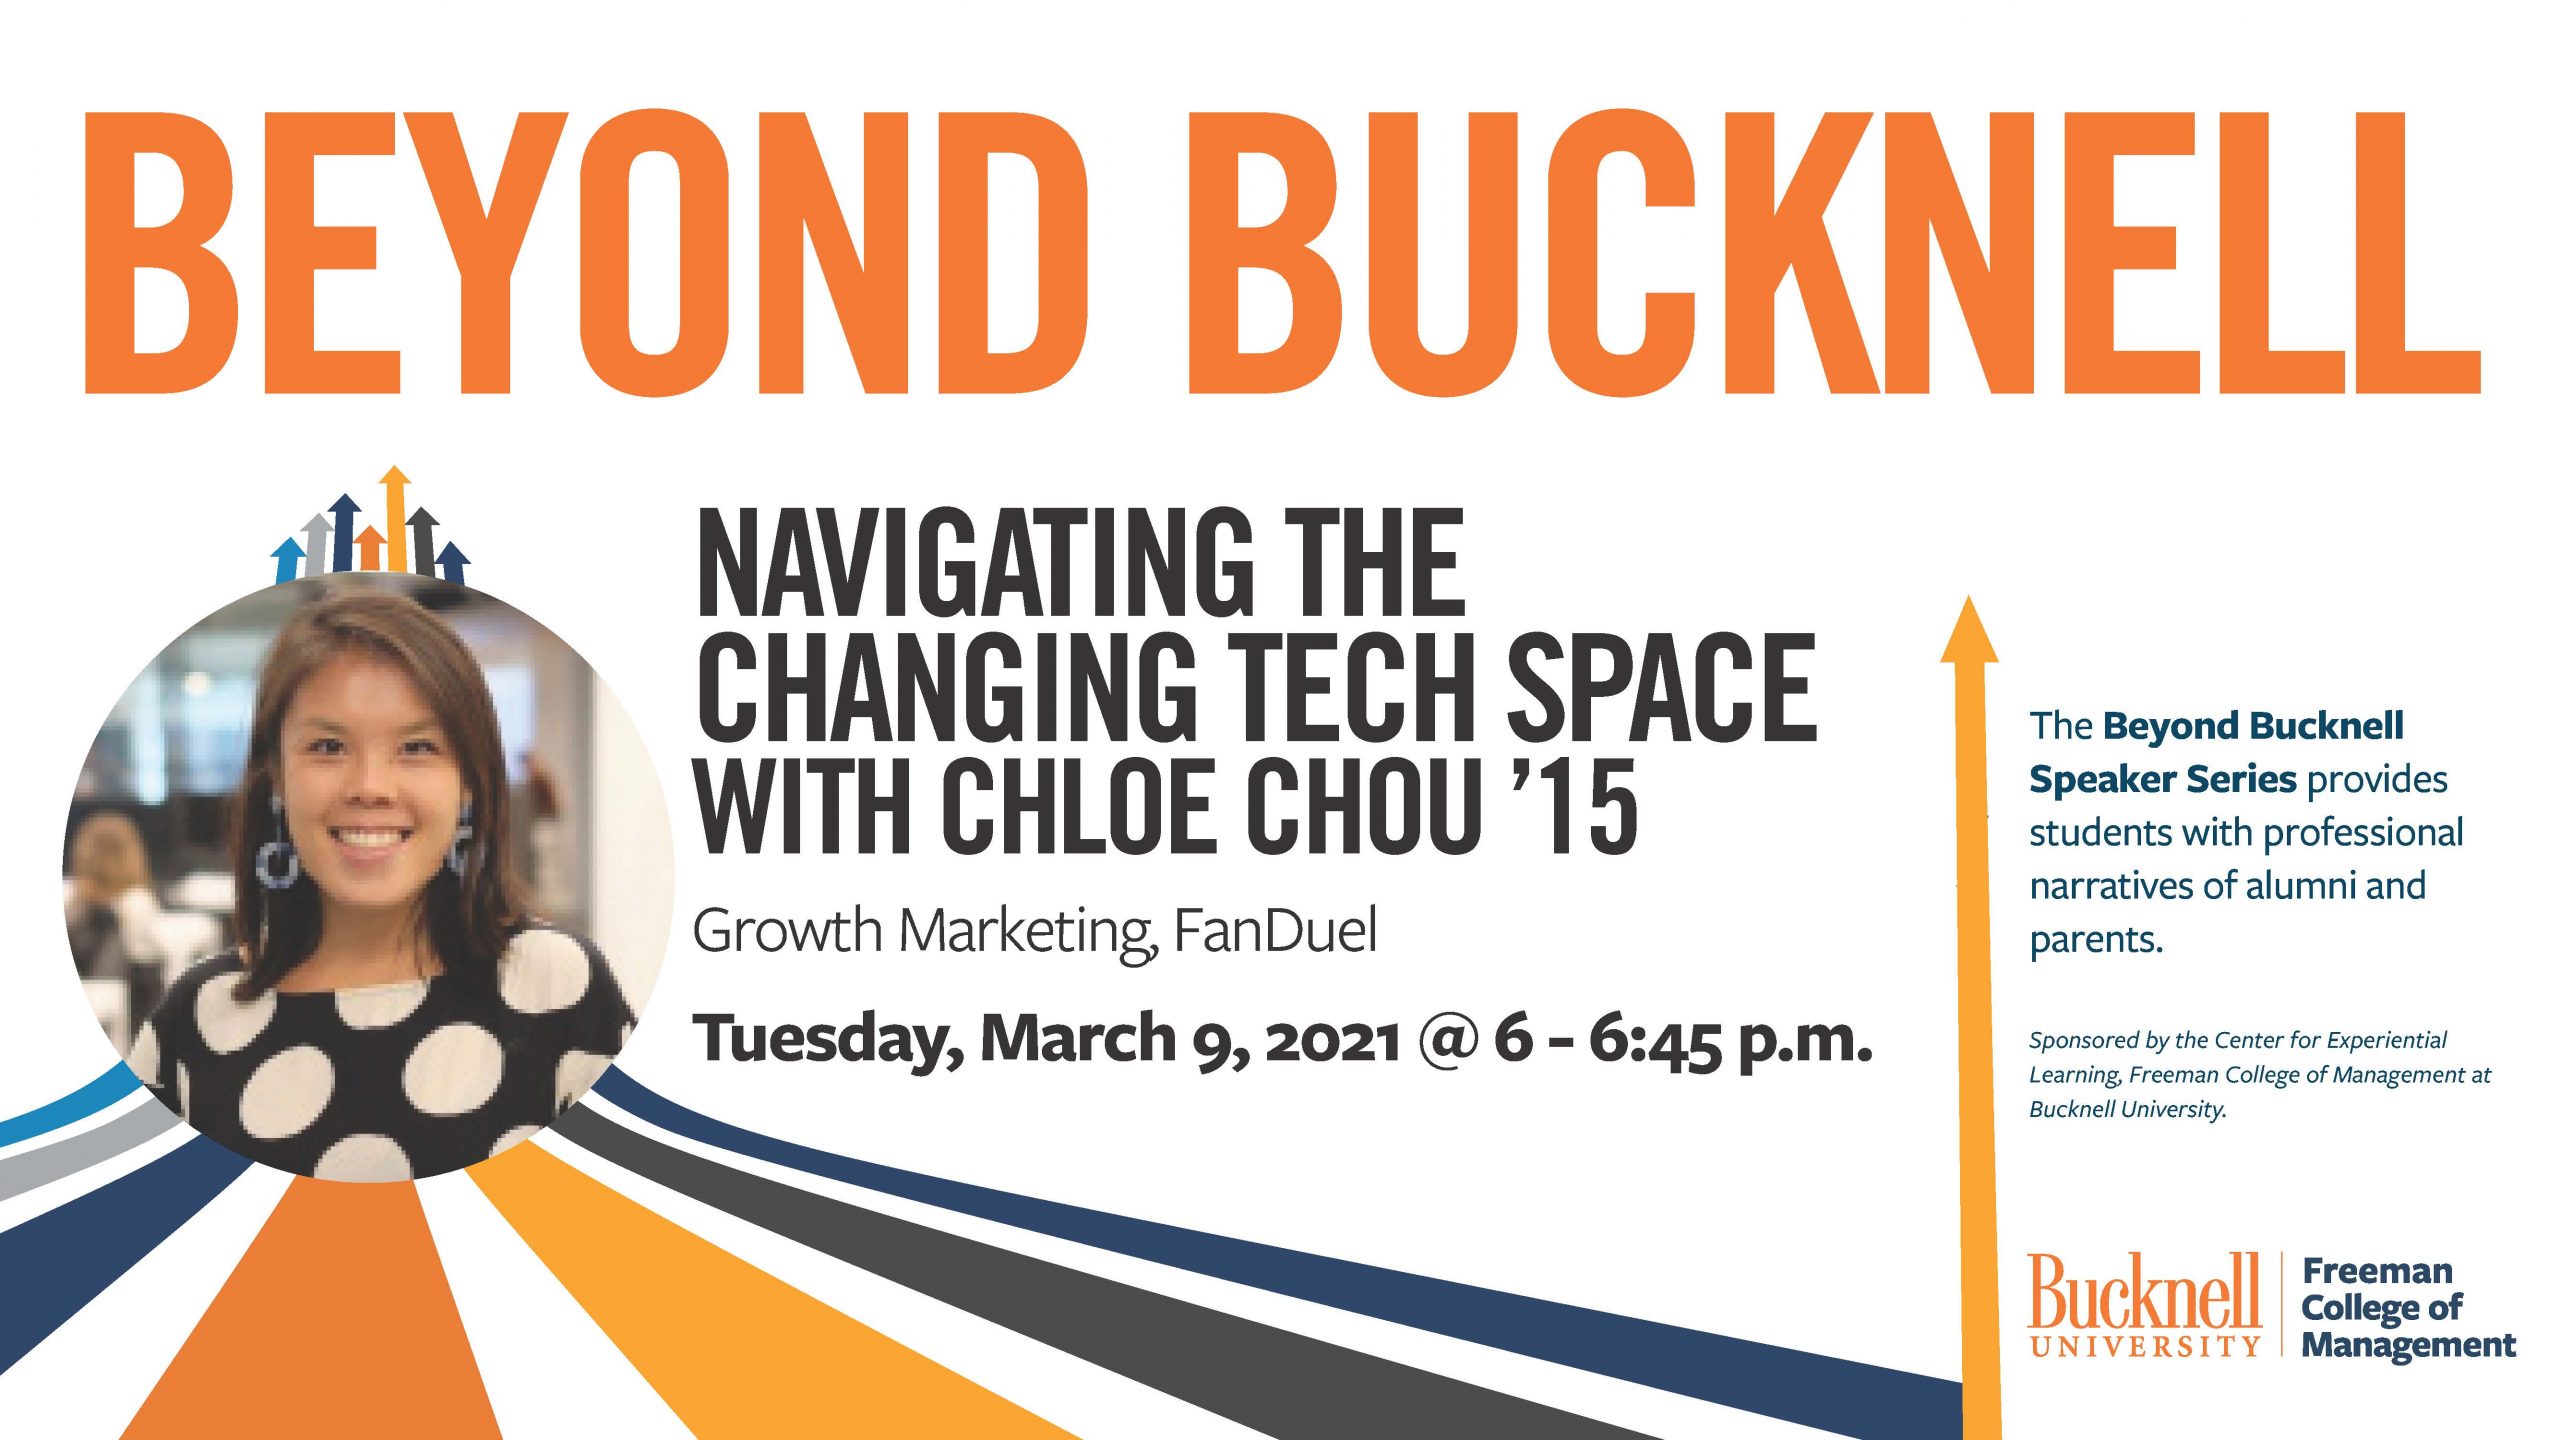 Beyond Bucknell Speaker Series welcomes Chloe Chou ’15 on March 9, 6-6:45pm